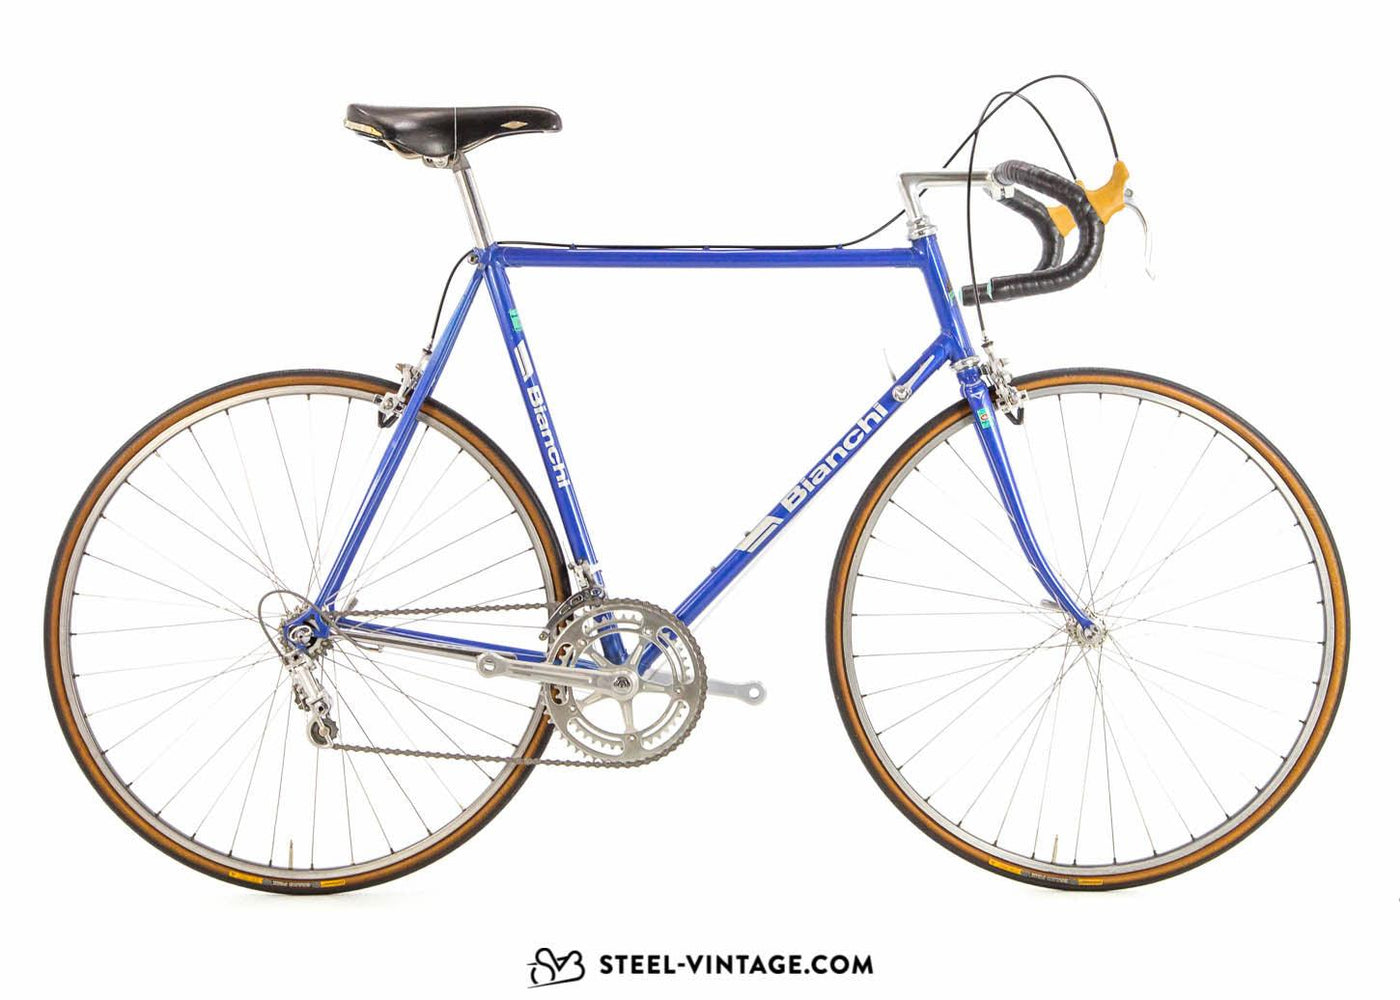 Bianchi Campione d'Italia Classic Road Bike 1980s - Steel Vintage Bikes